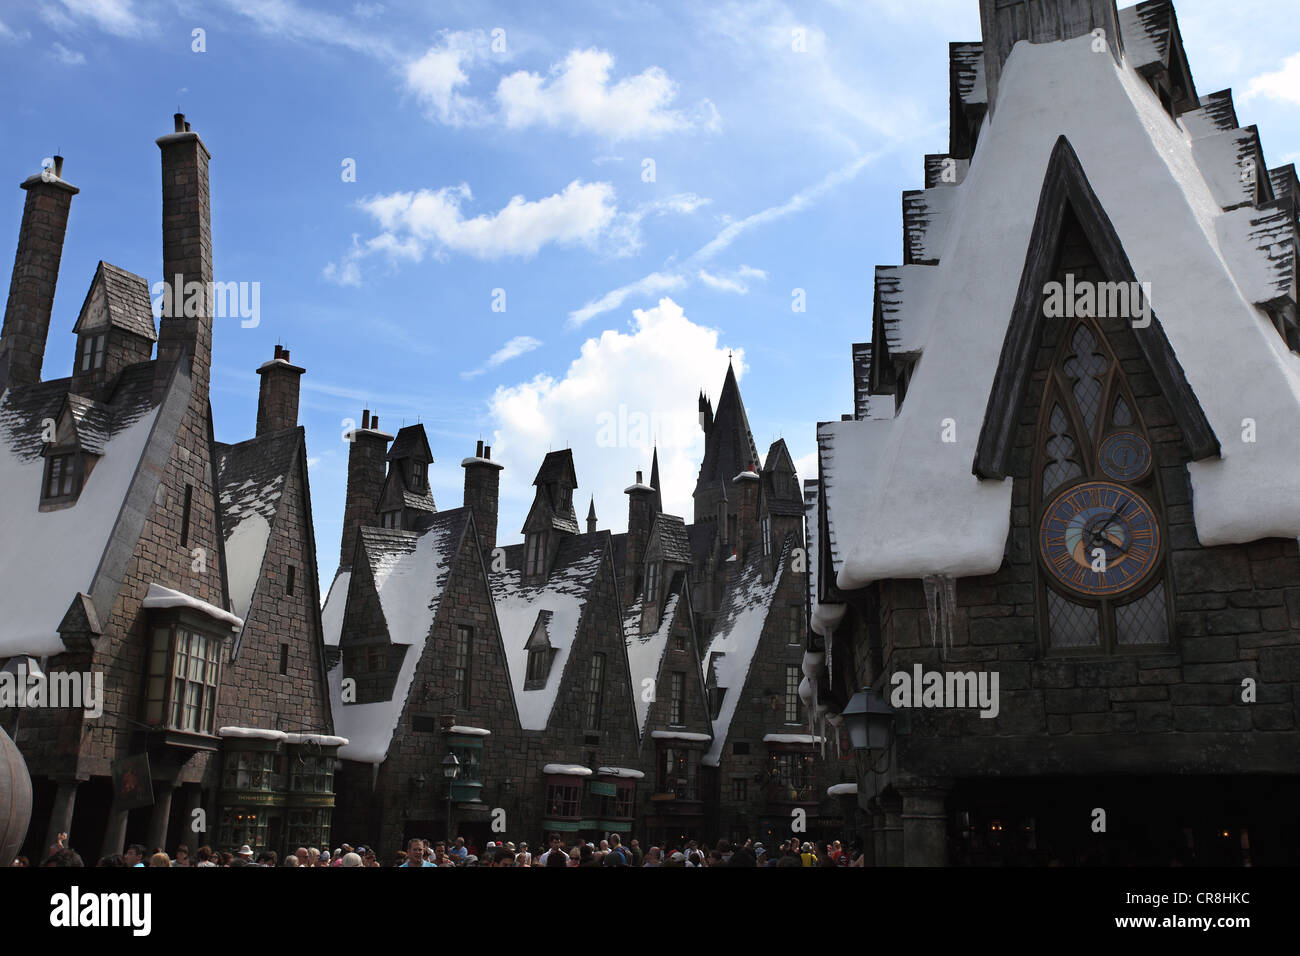 Villaggio Hogsmeade, Harry Potter, Universal Studios Foto stock - Alamy